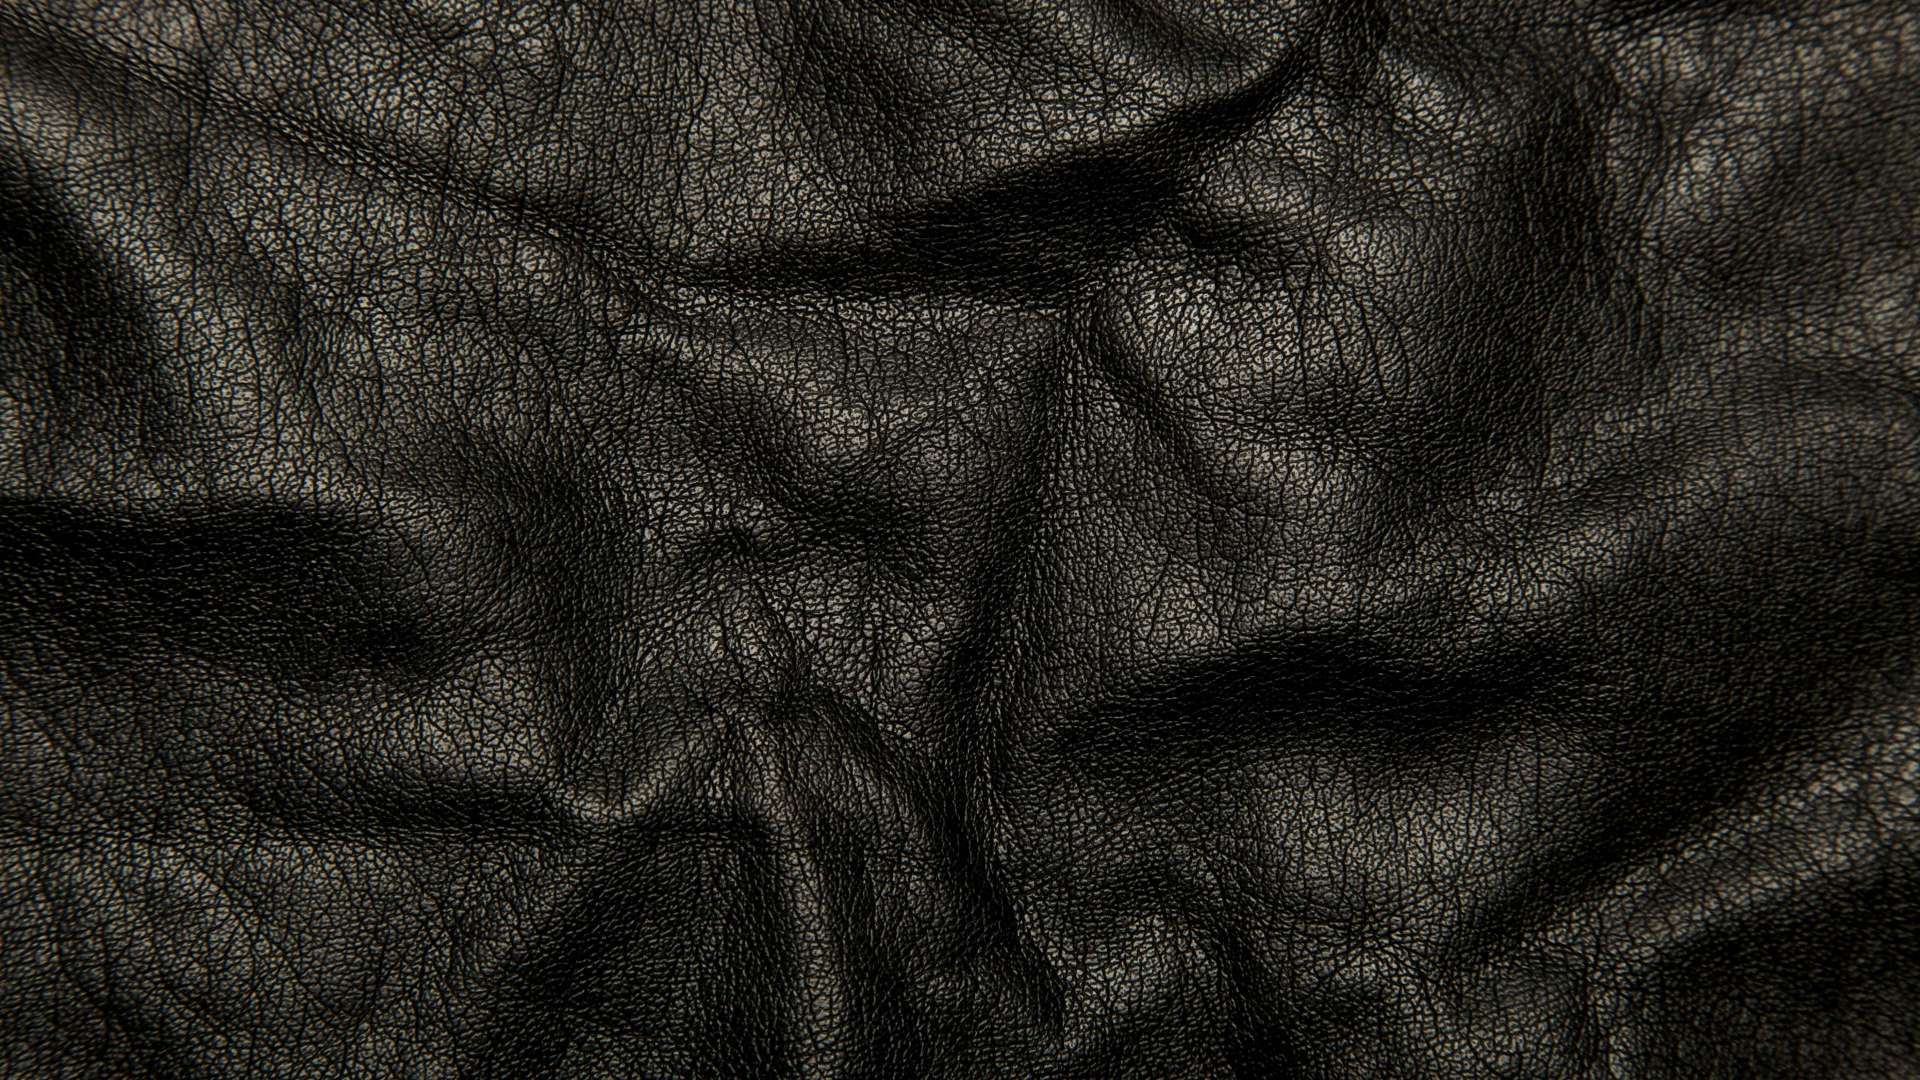 Leather Black Background Texture Wrinkles Cracks HD Wallpaper 1080p